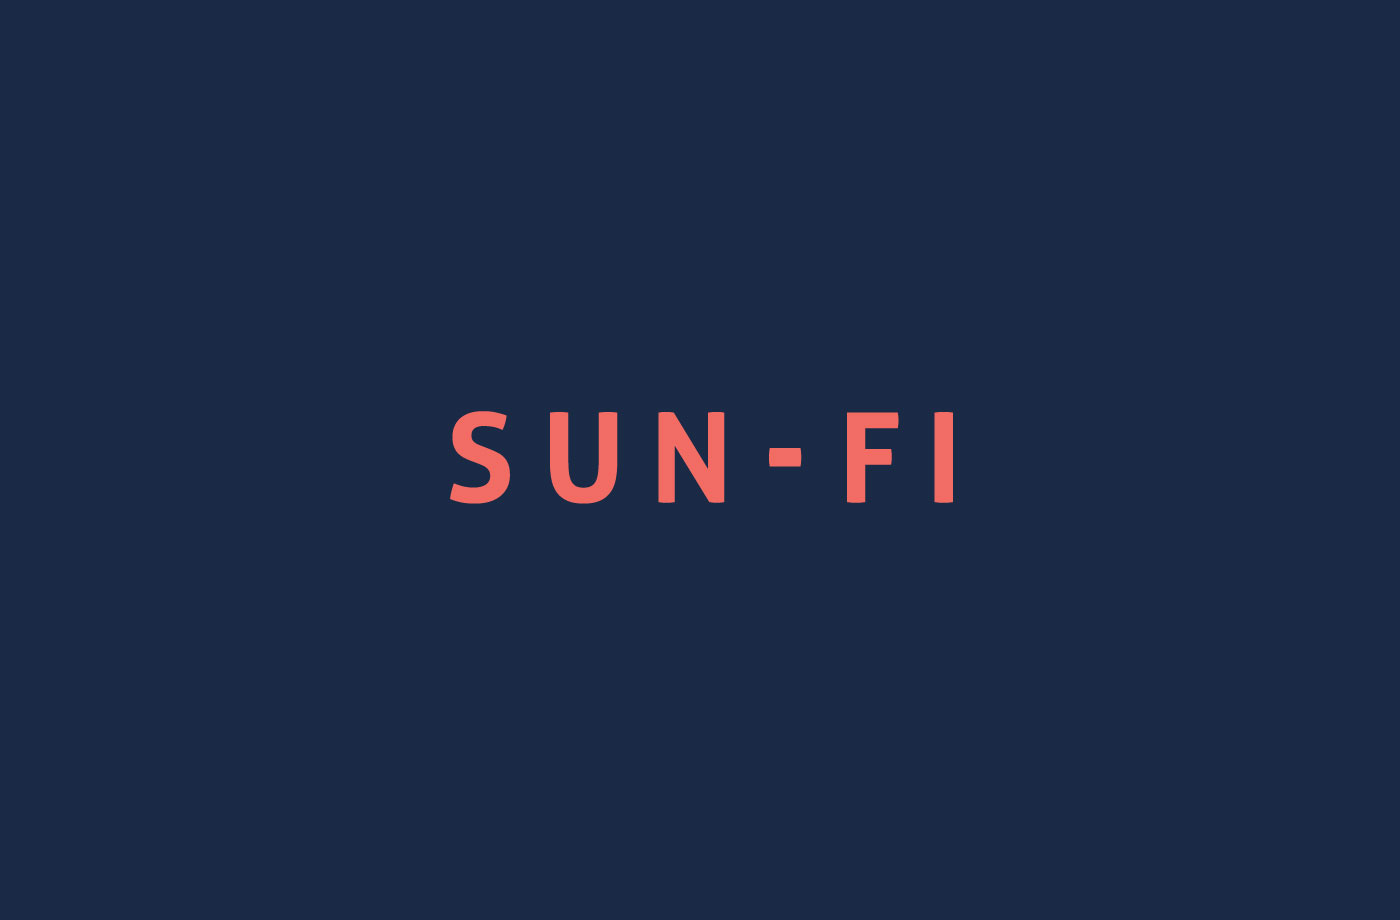 Adobe Portfolio SUN-FI U.V. sun screen sun protection bunker3022 vanya silva clothes ropa para niños kids Kids Clothes buenos aires Retail lifestyle